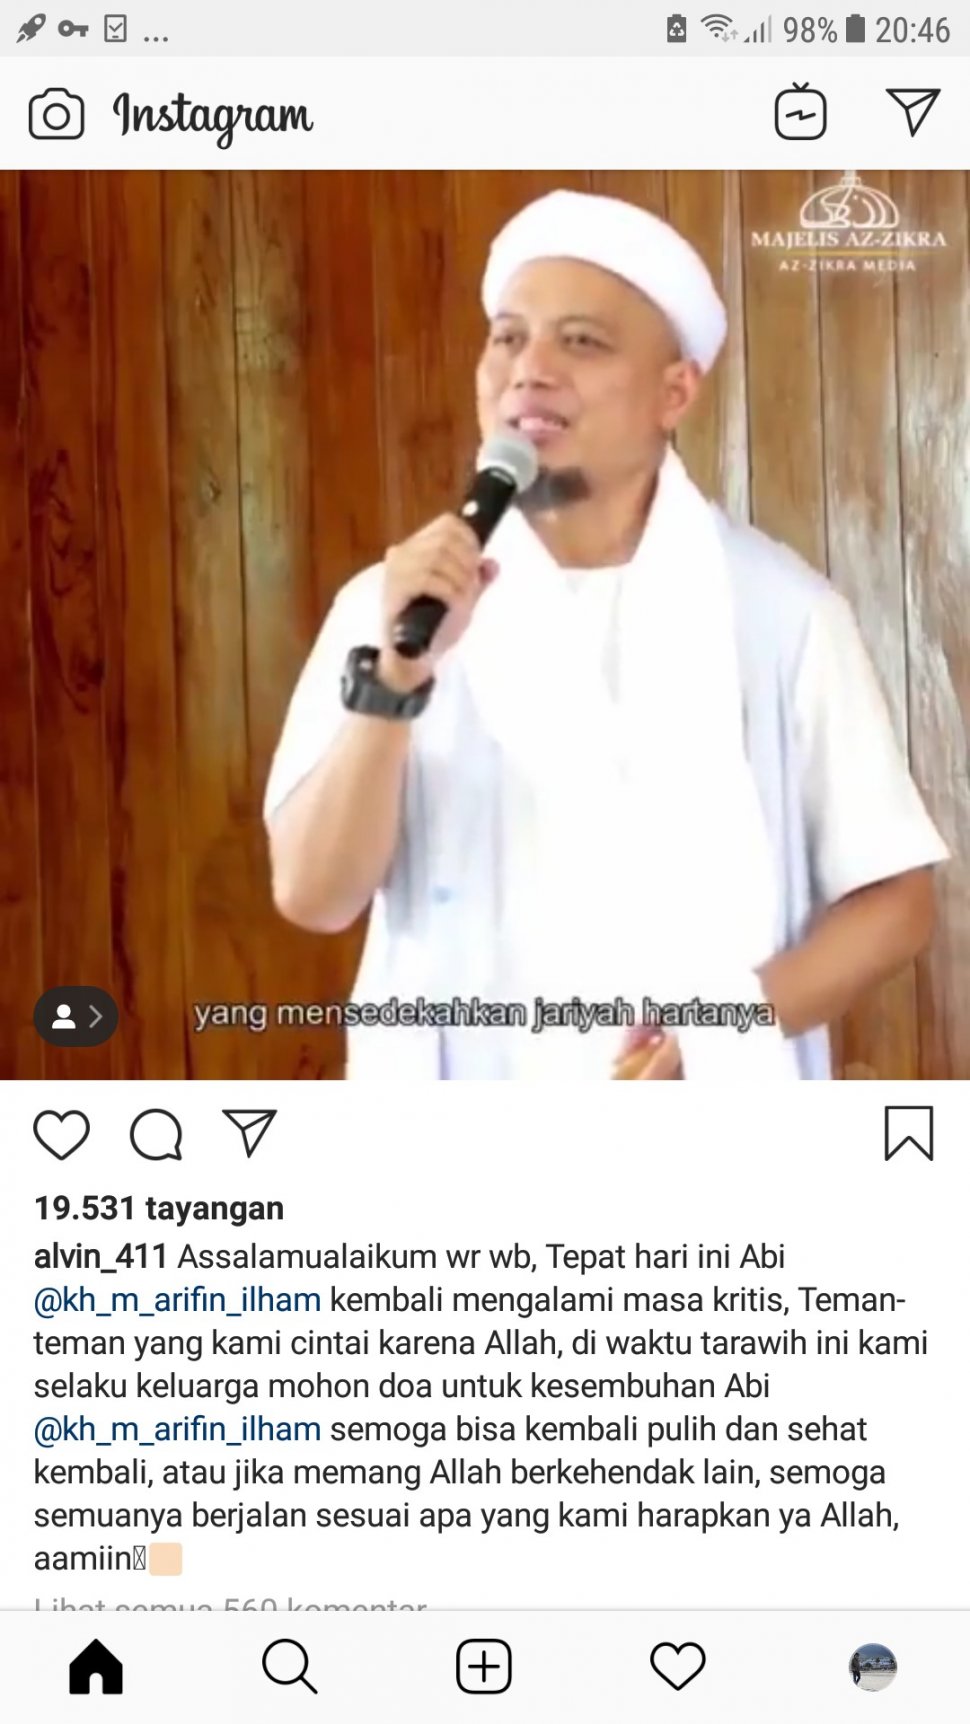 Postingan Alvin terkait kondisi Ustaz Arifin Ilham.